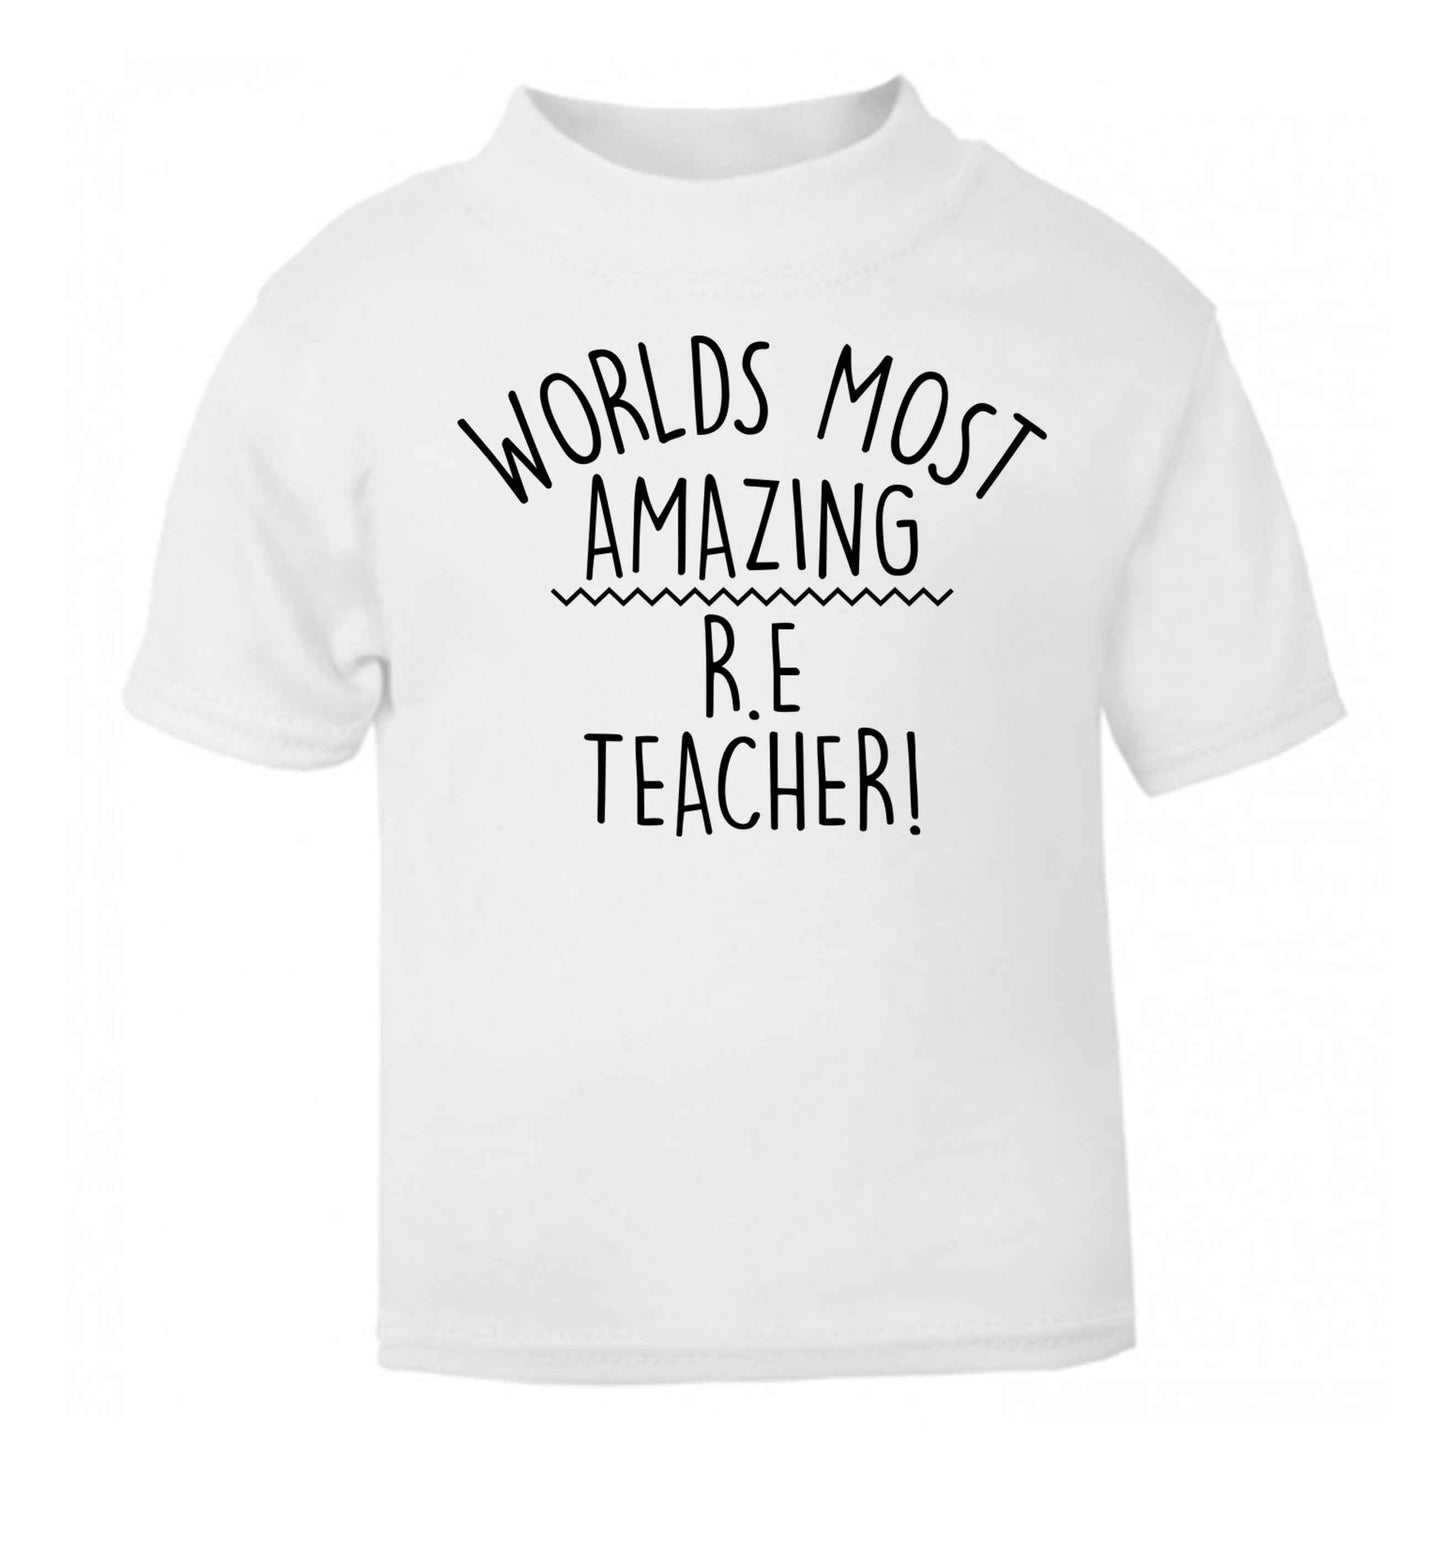 Worlds most amazing R.E teacher white baby toddler Tshirt 2 Years